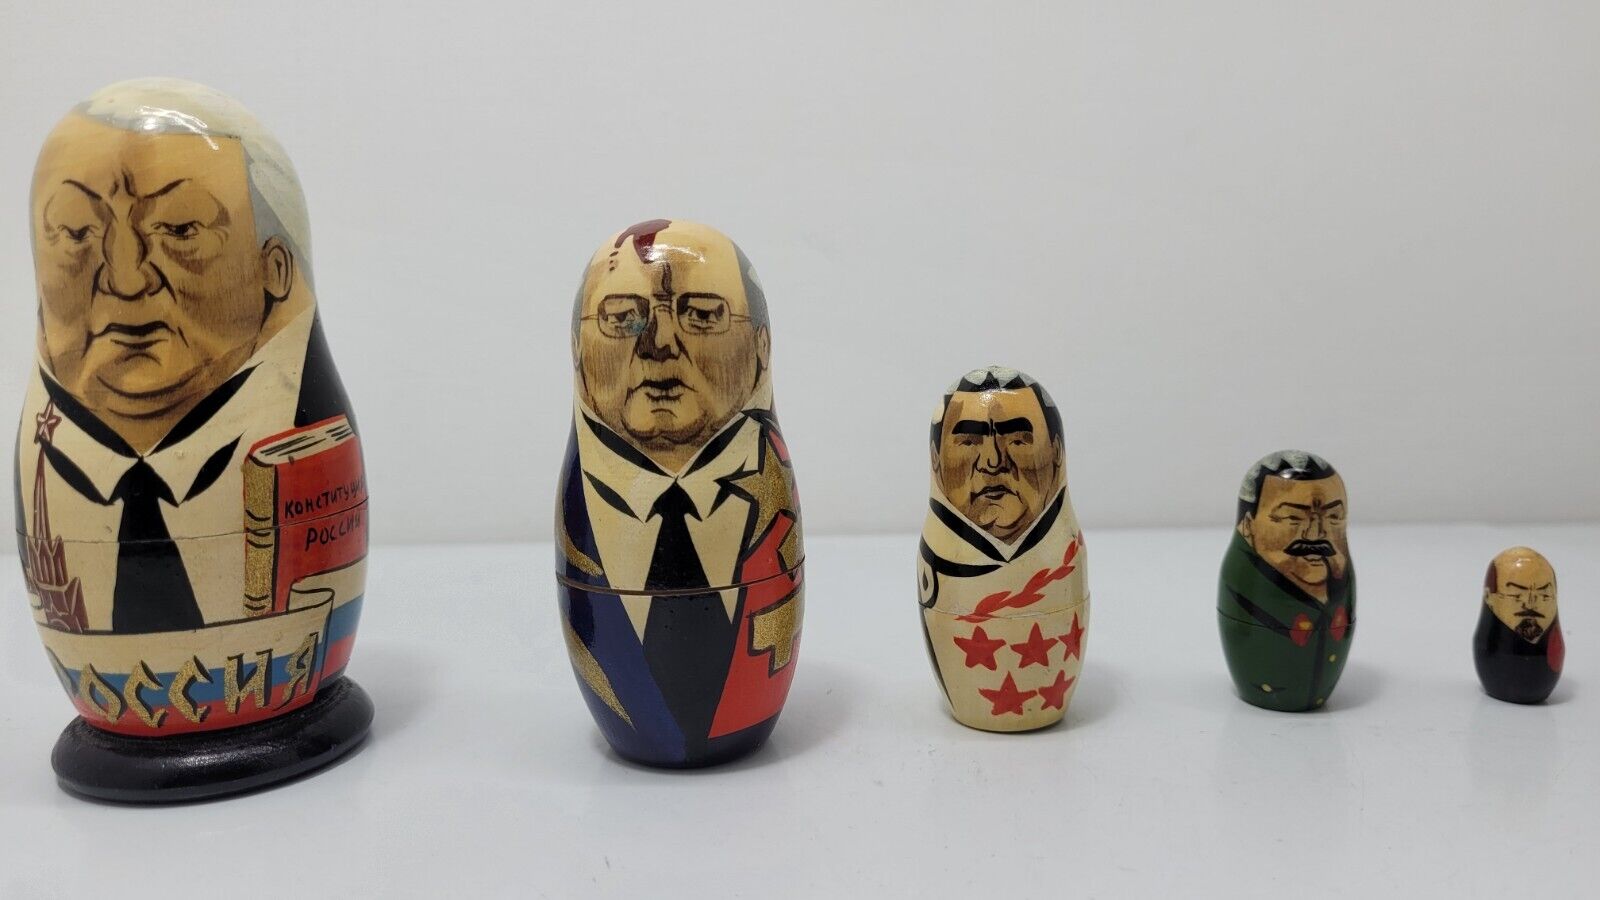 Russian Nesting Dolls 5-piece, Russian Leaders Themed